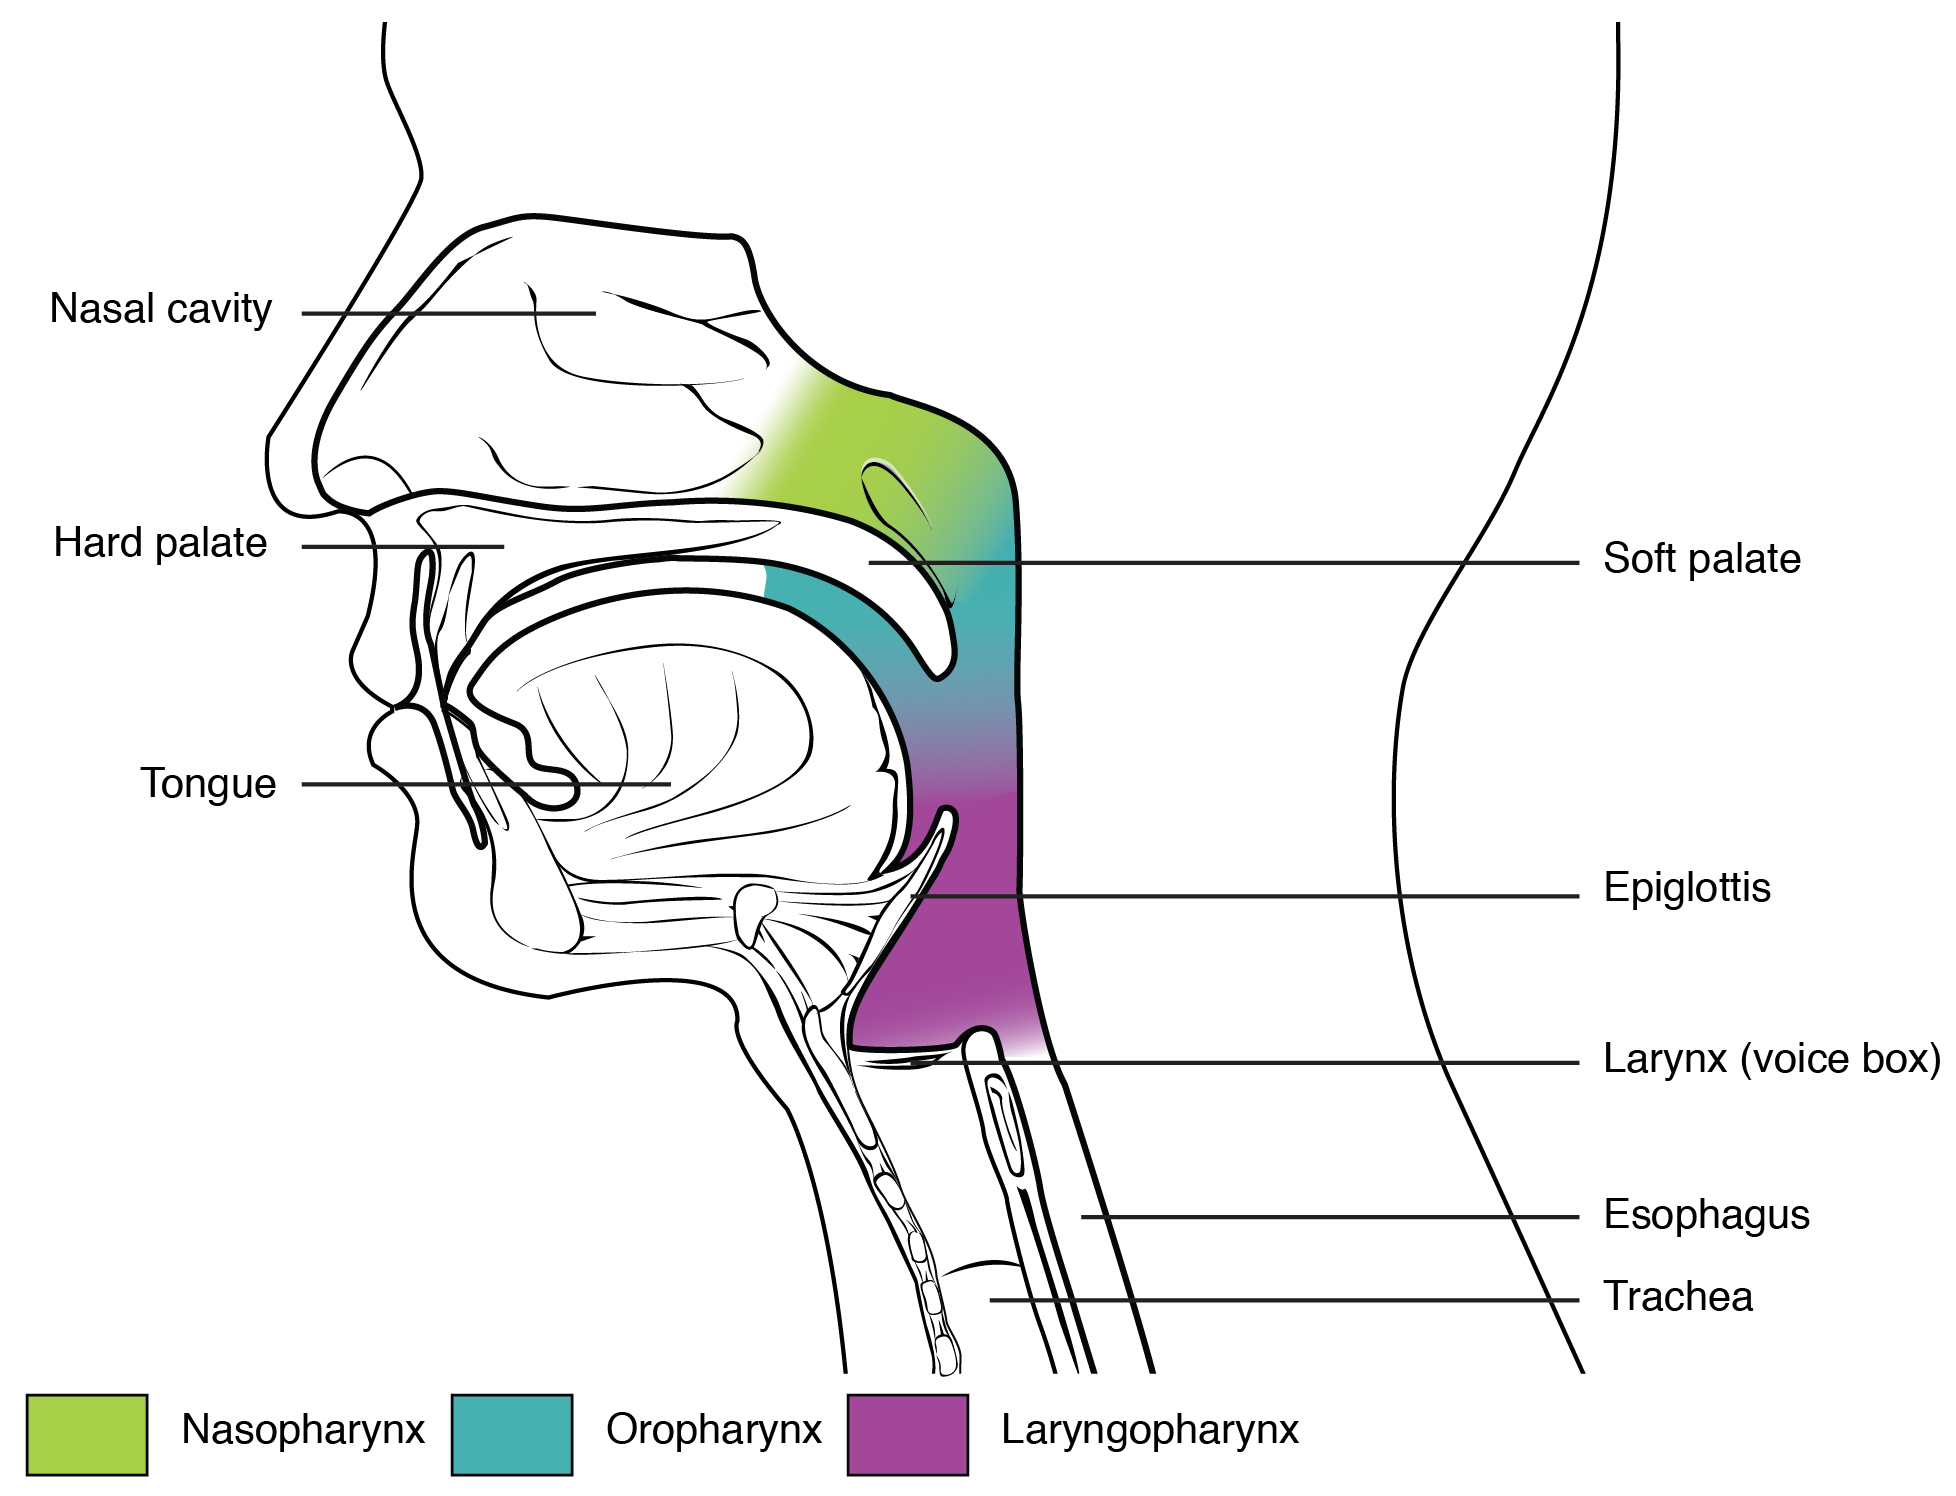 Pharynx imegawanywa katika nasopharynx, oropharynx, na laryngopharynx.